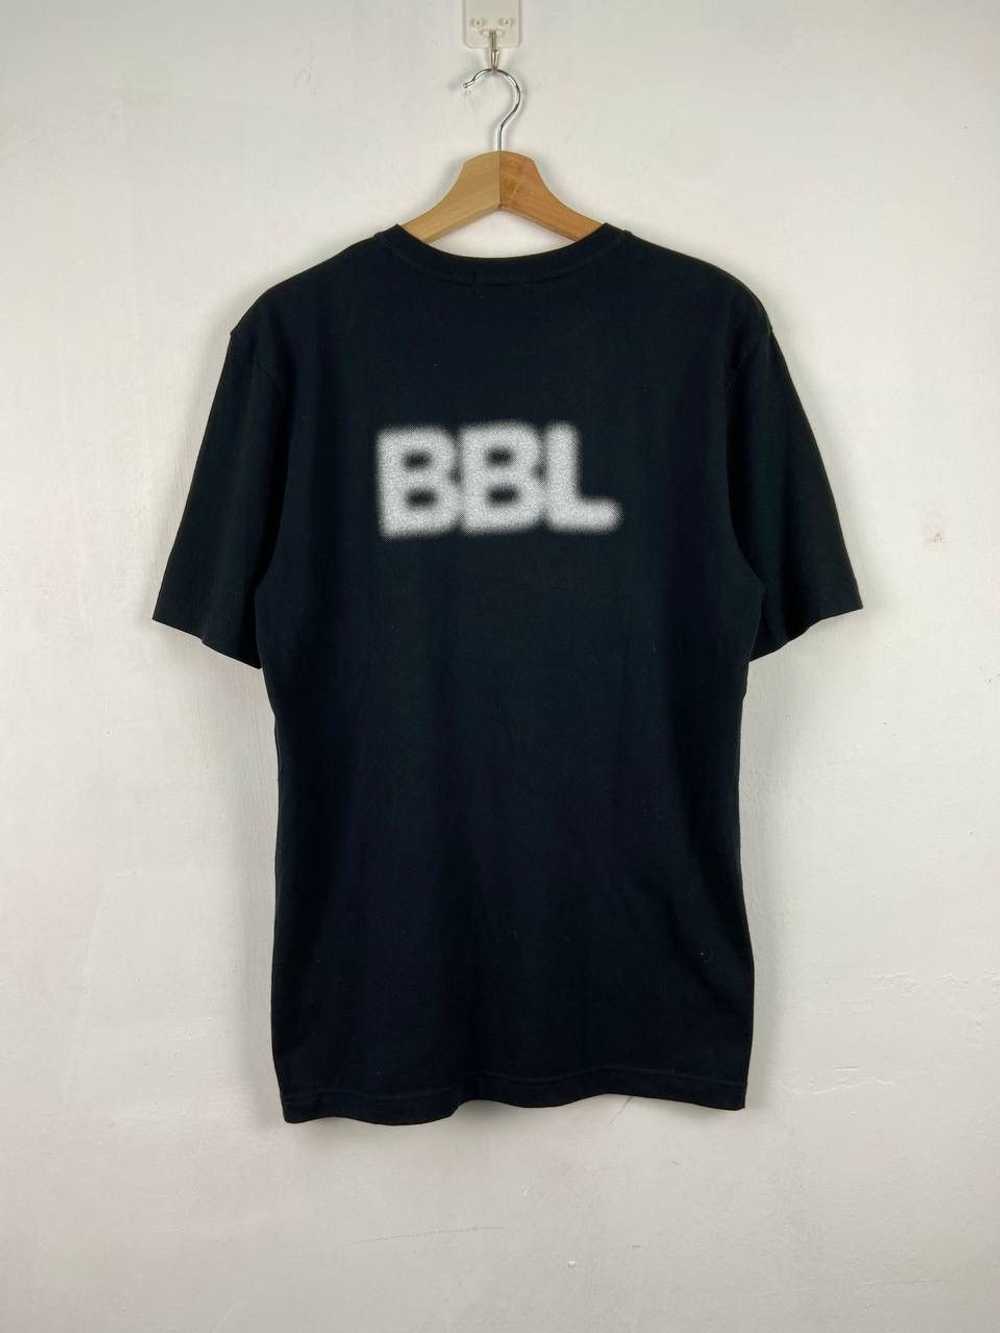 Burberry Burberry black label tshirt big logo - image 2